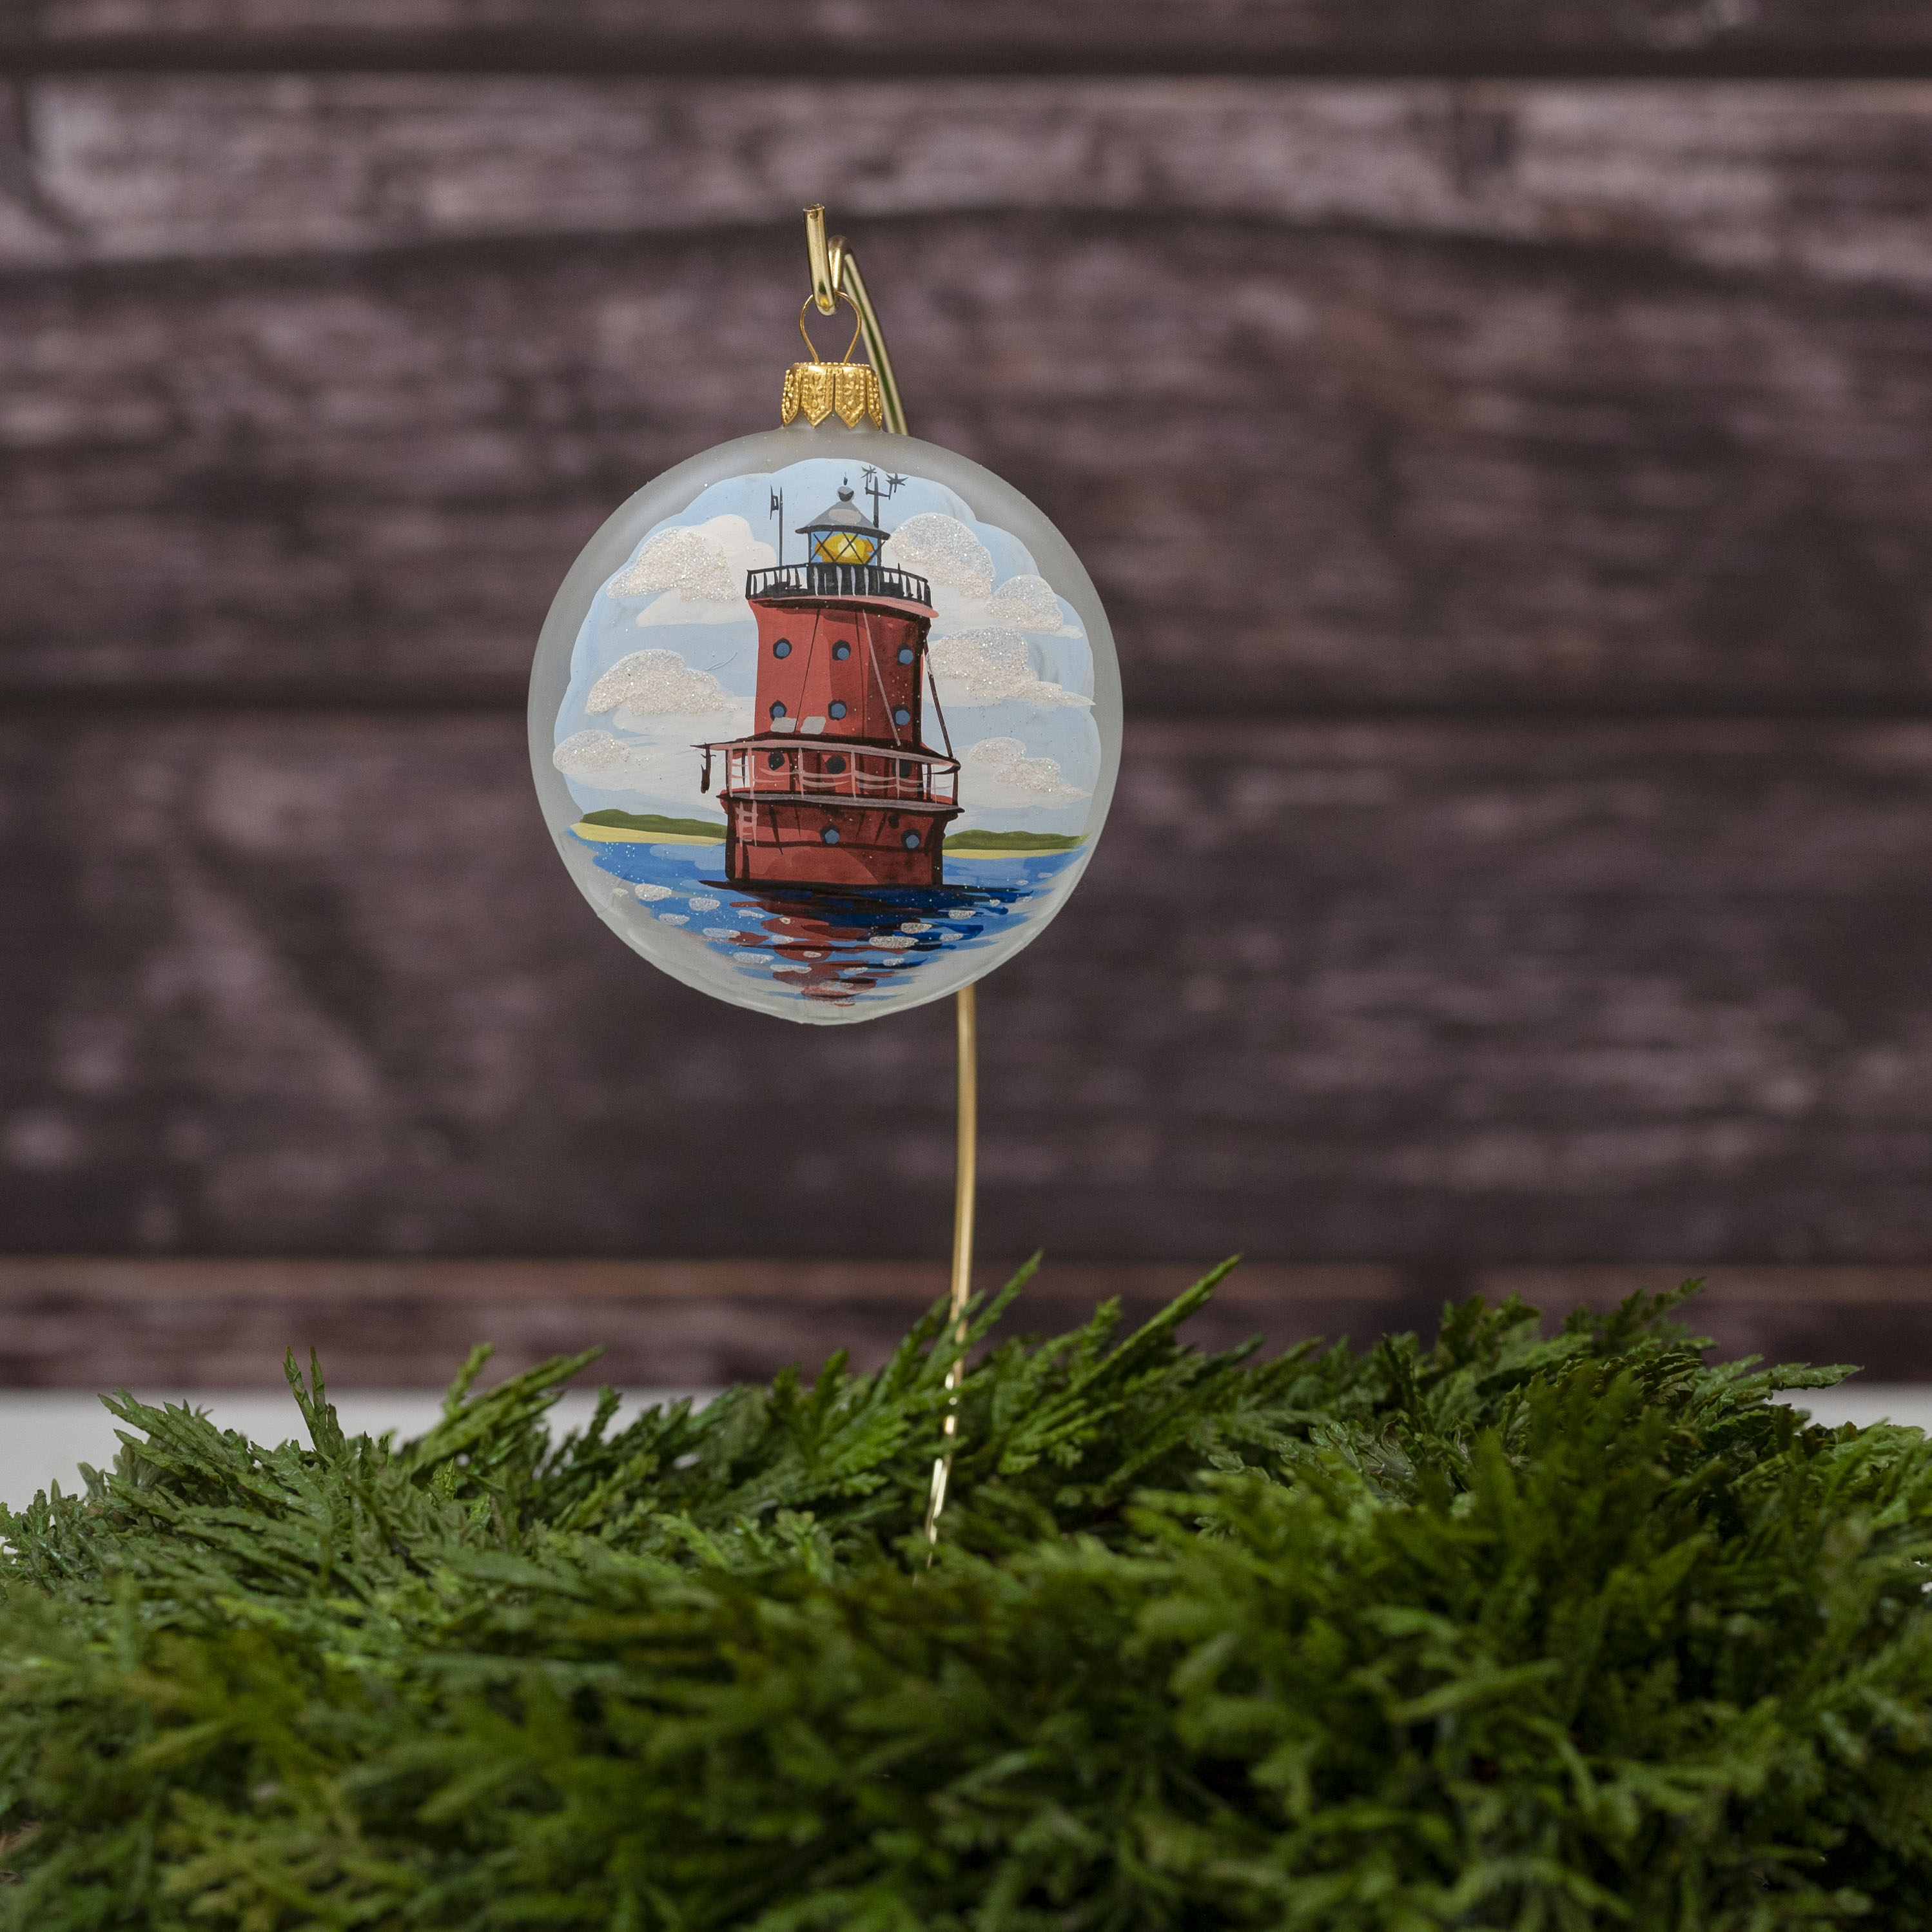 Thimble Shoals Lighthouse Heirloom Ornament